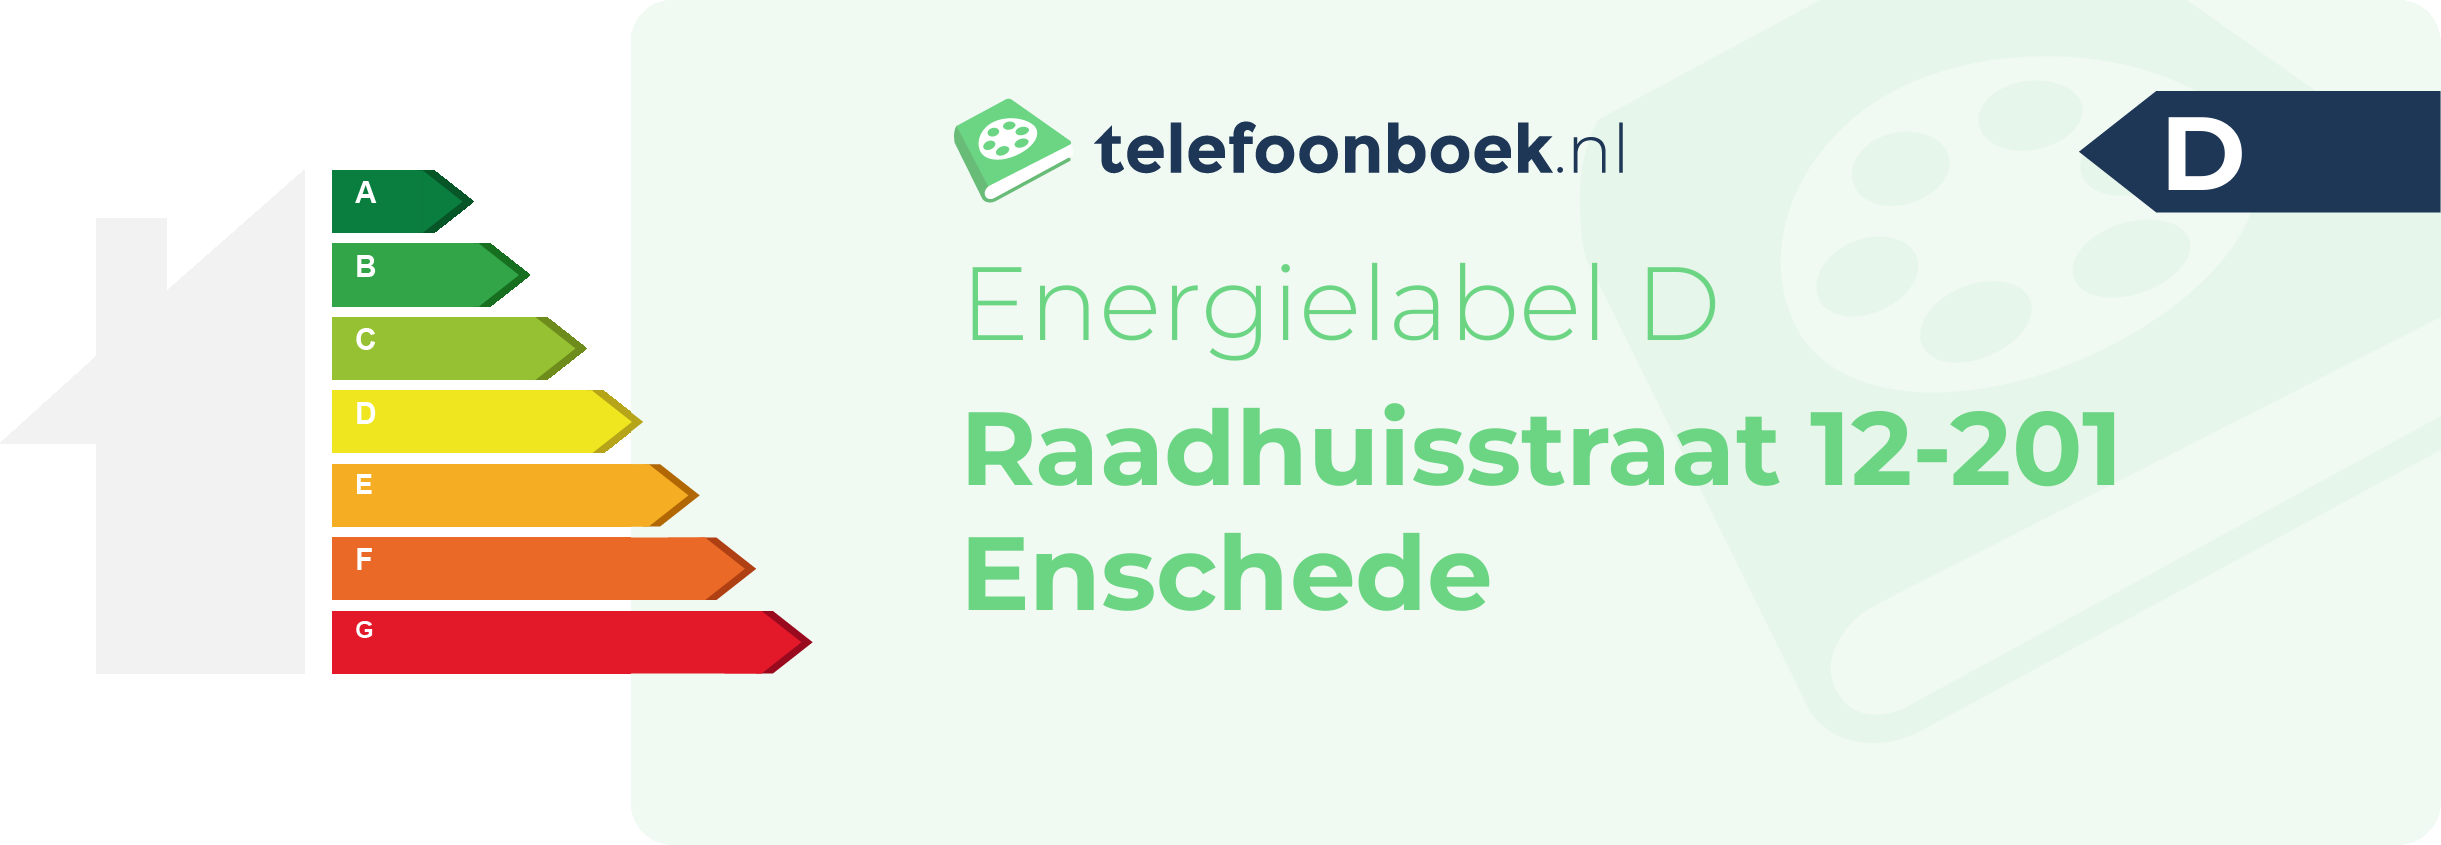 Energielabel Raadhuisstraat 12-201 Enschede